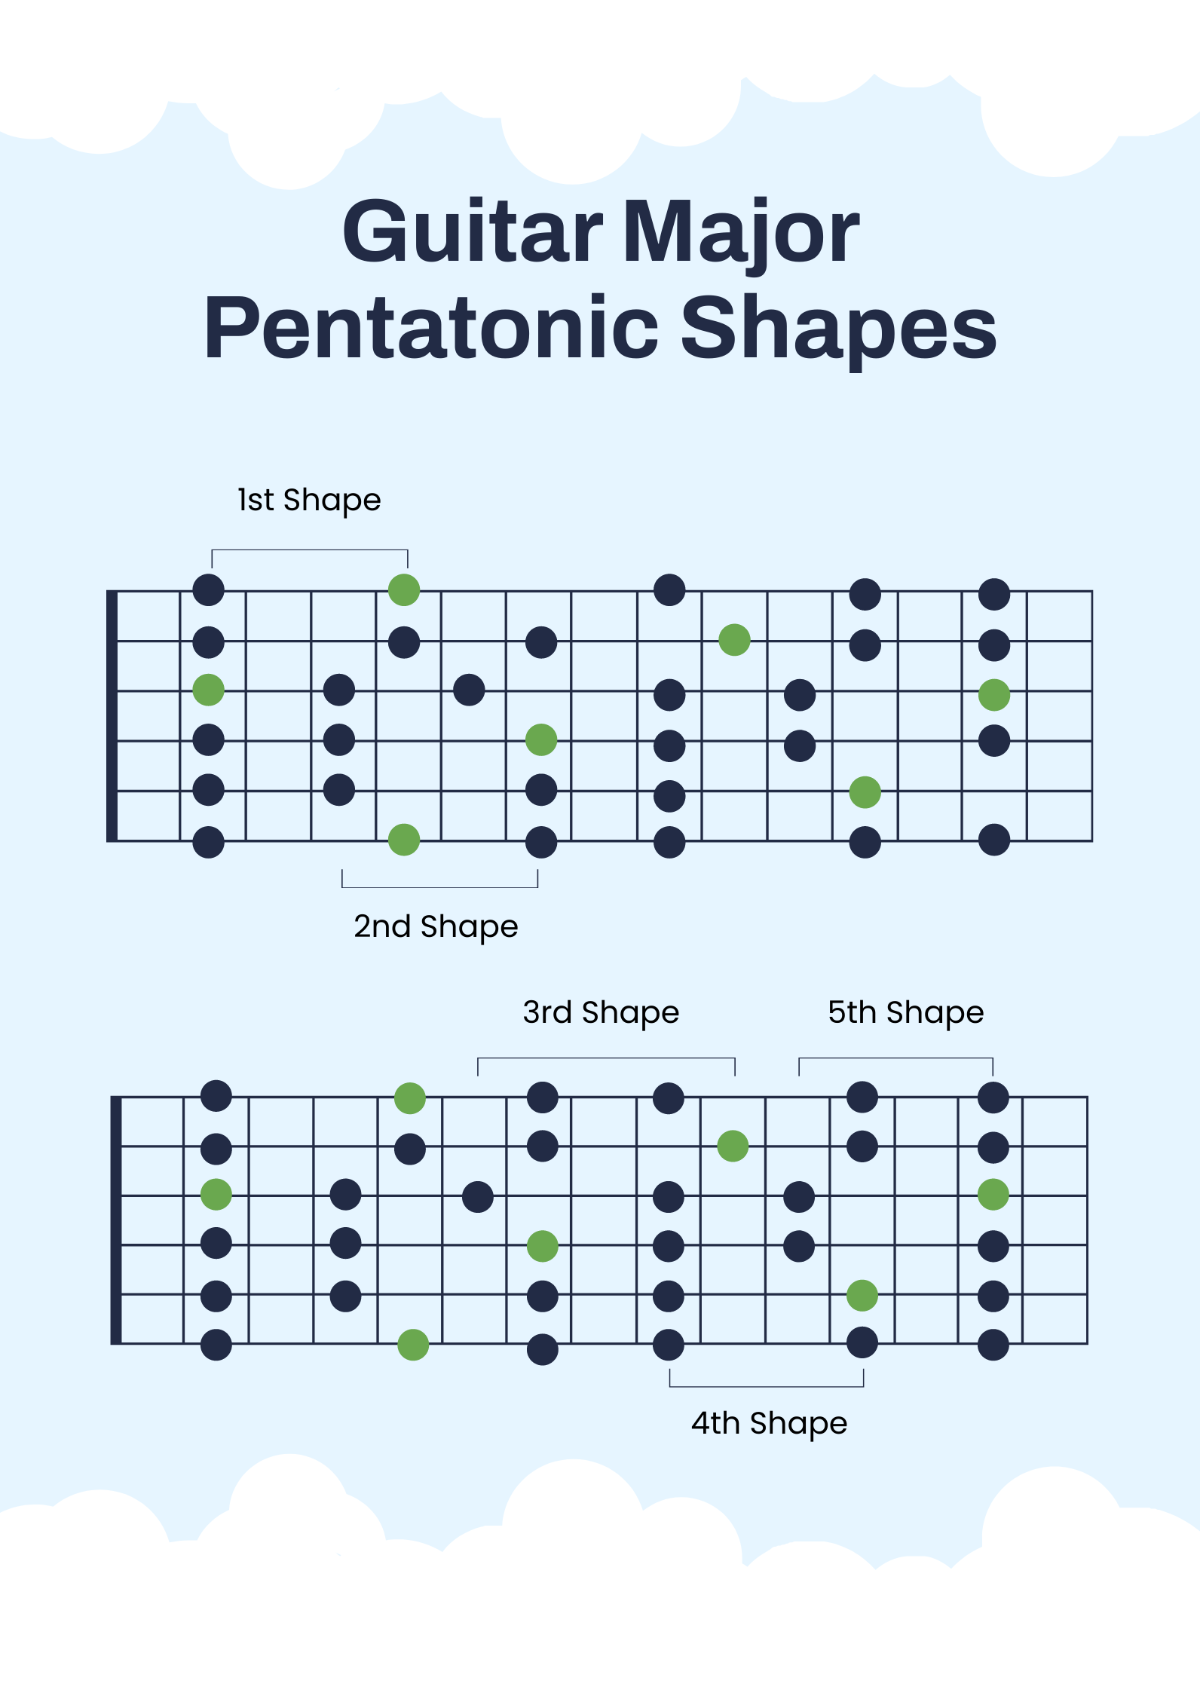 Guitar Major Pentatonic Scale 5 Shapes Chart Template